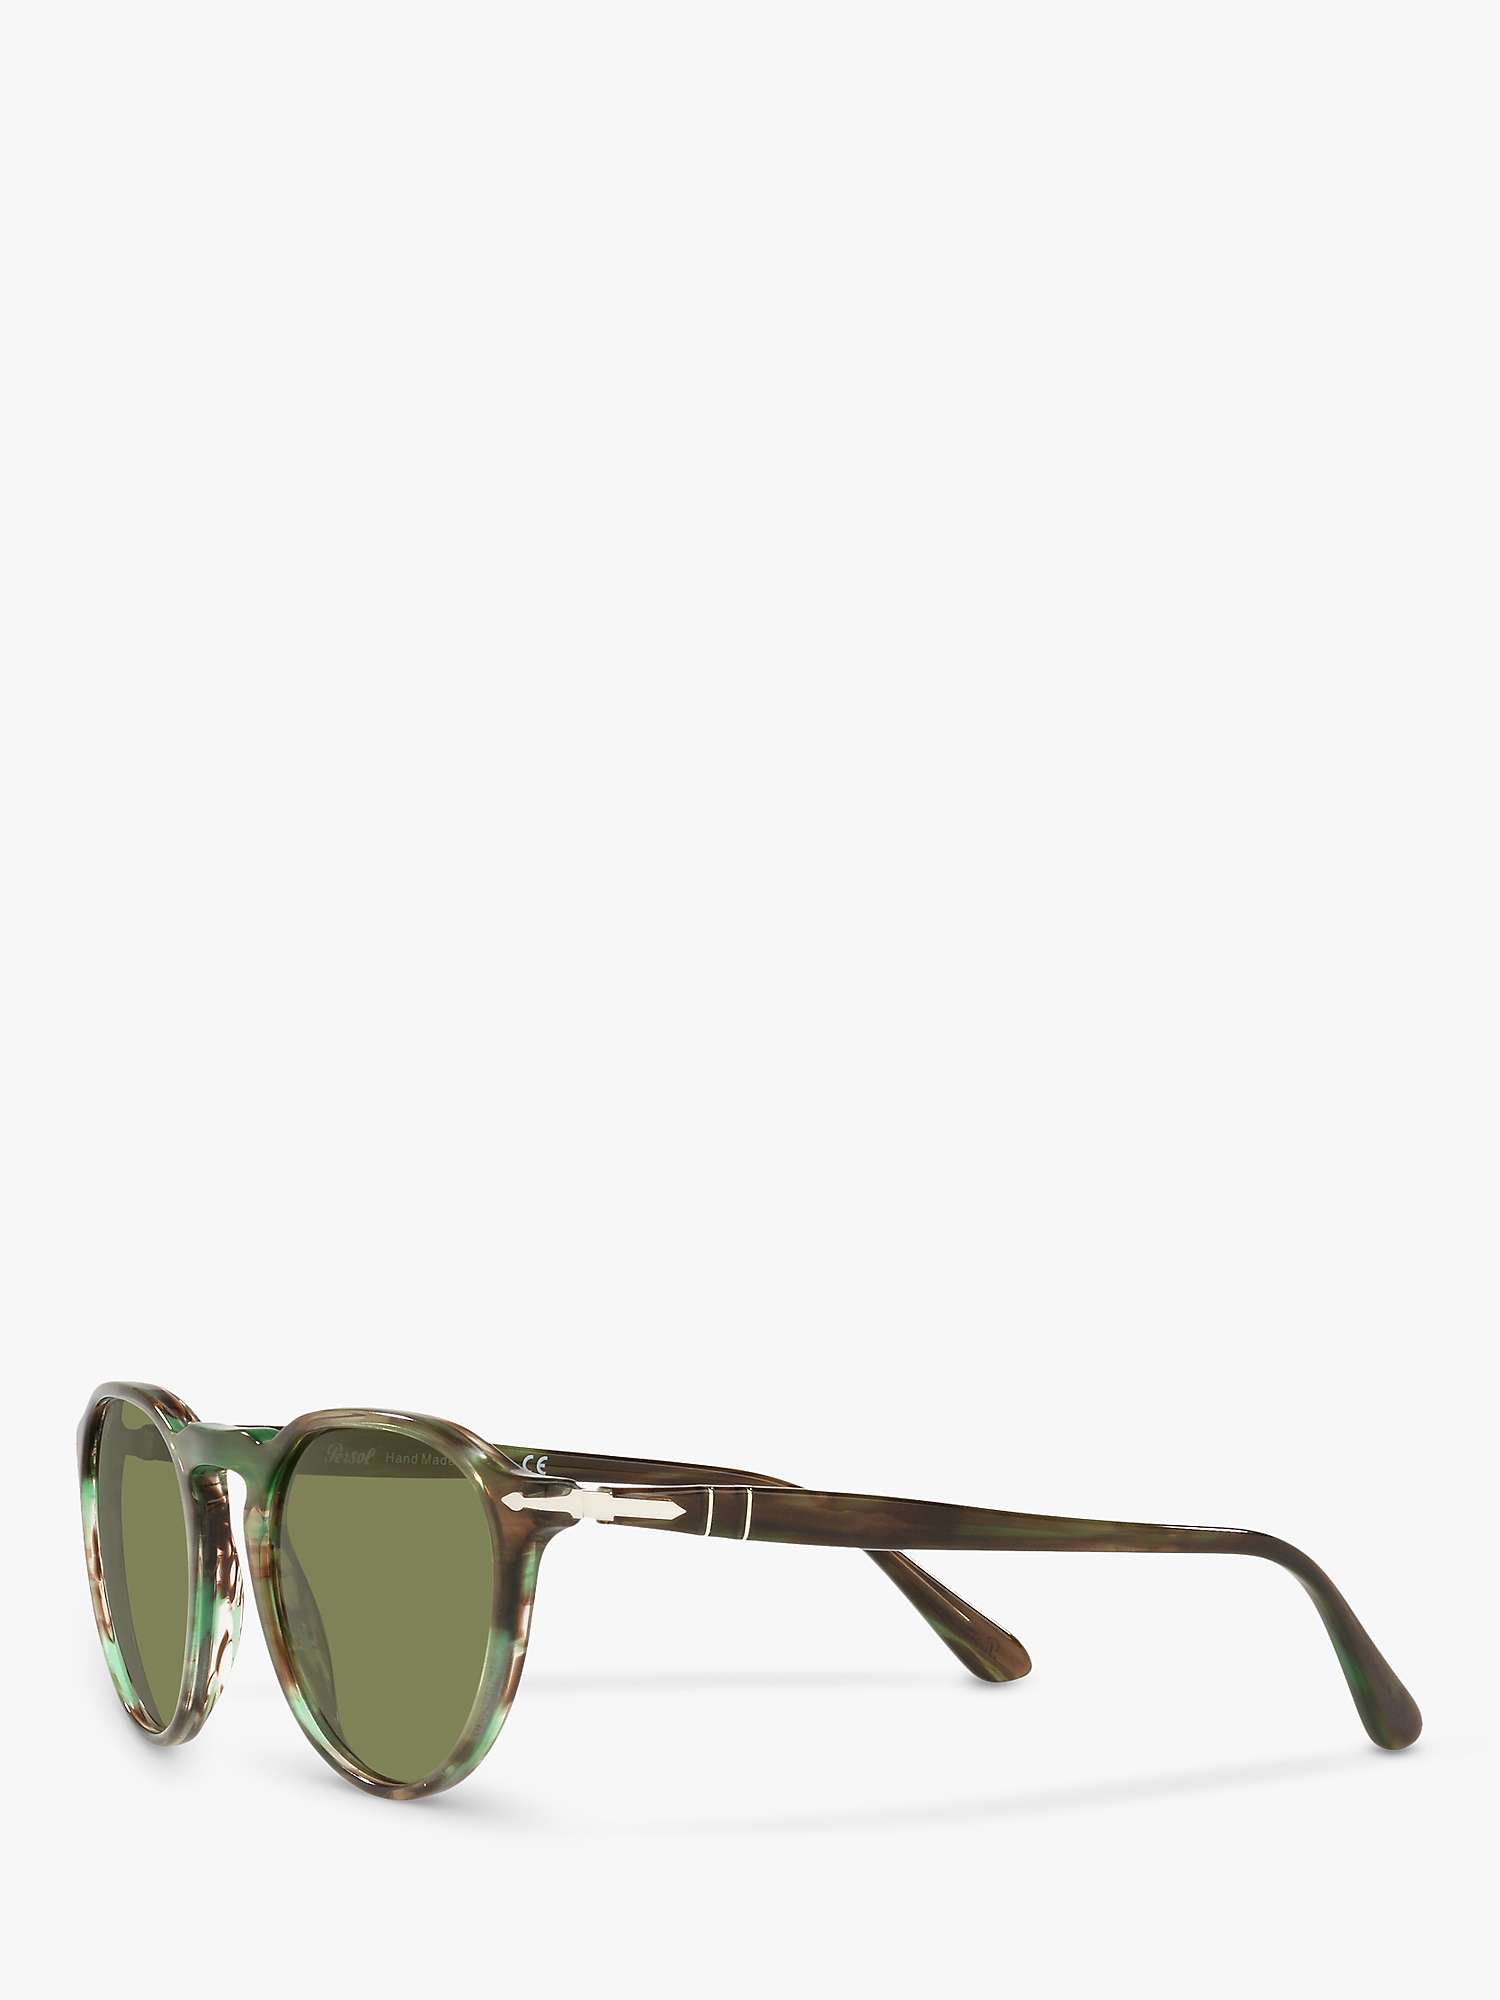 Buy Persol PO3286S Unisex Oval Sunglasses, Green Havana/Green Online at johnlewis.com